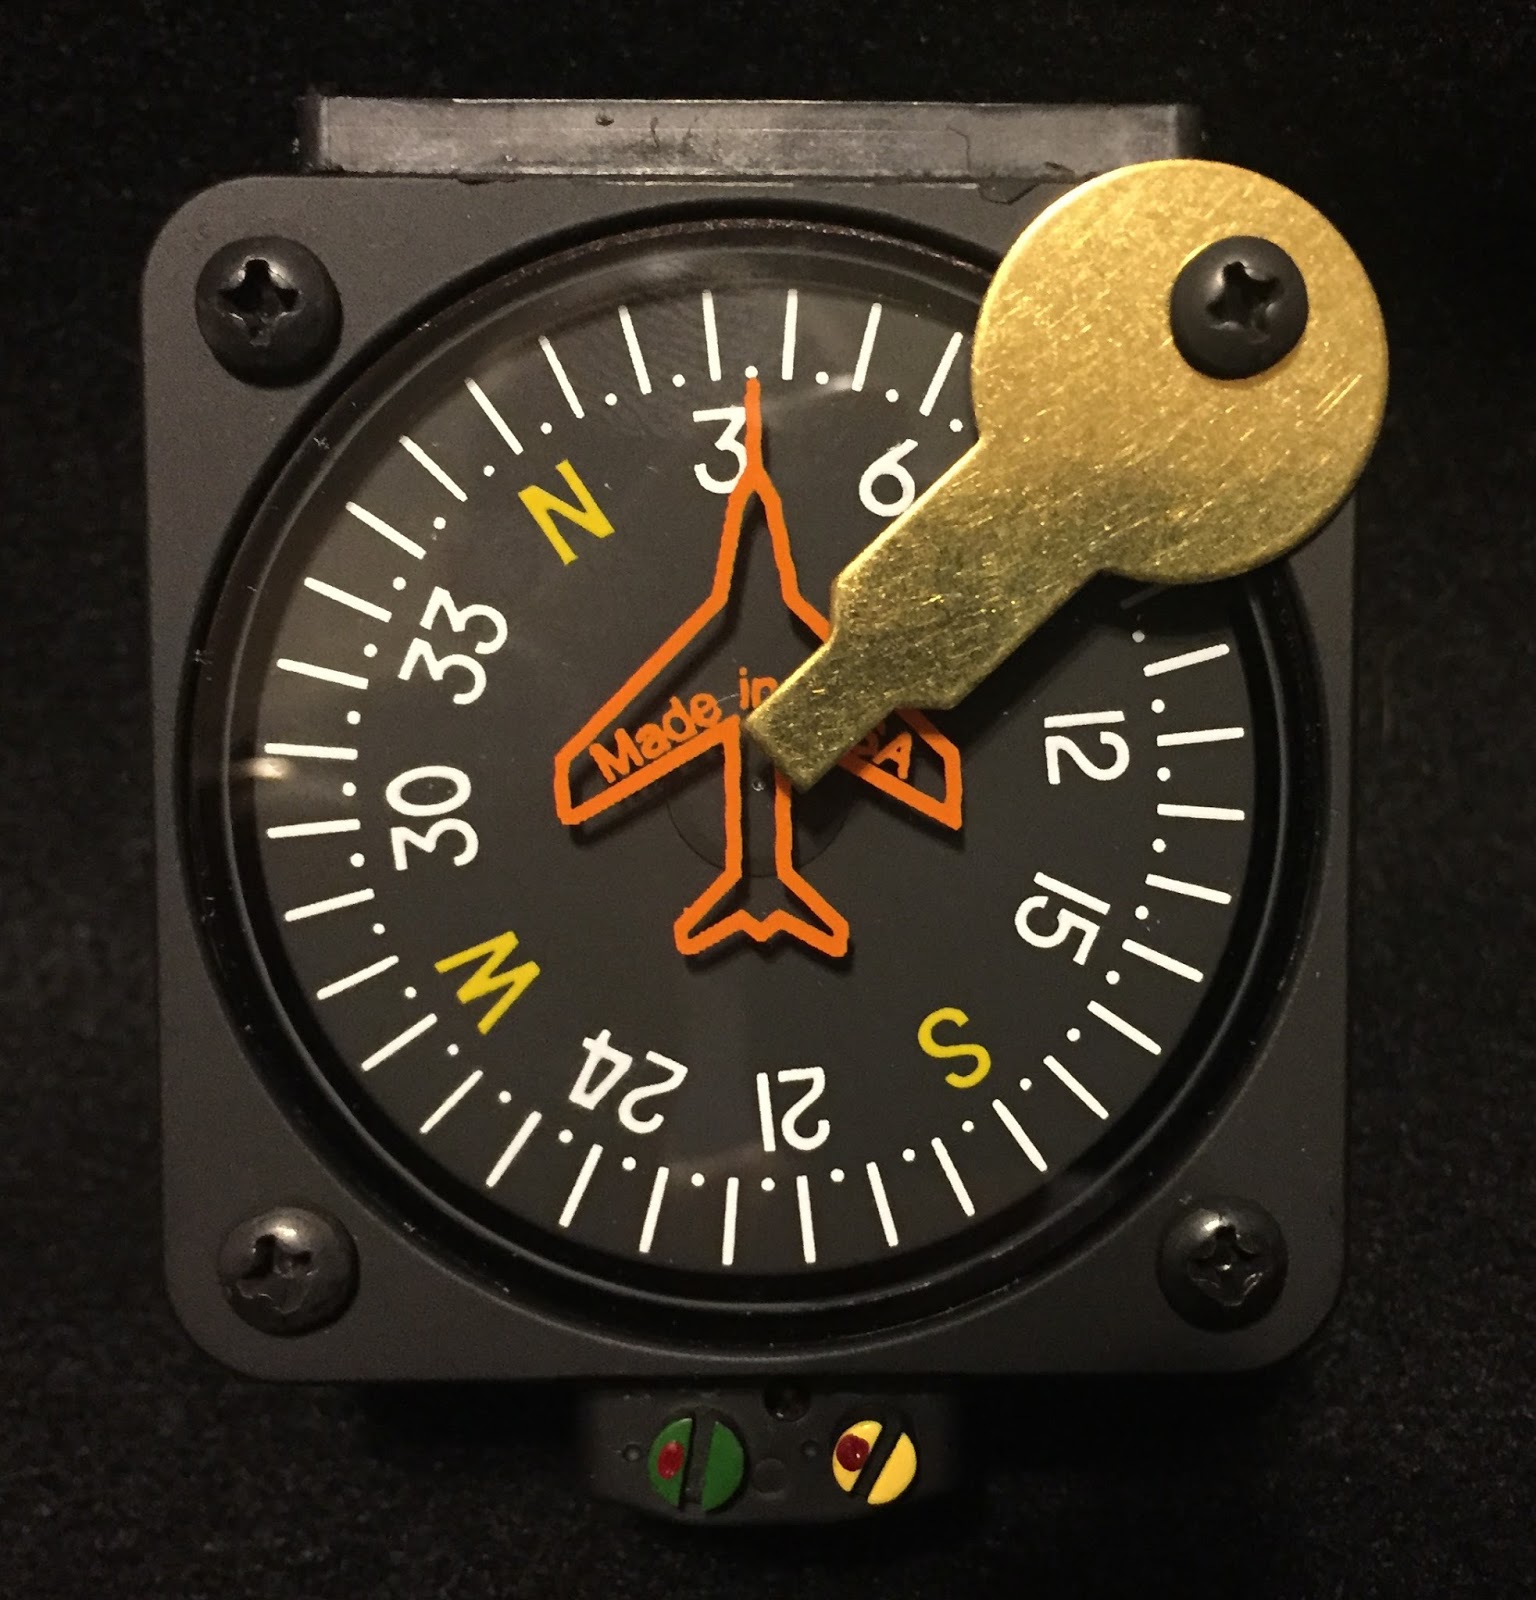 PAI-700 Vertical Card Compass